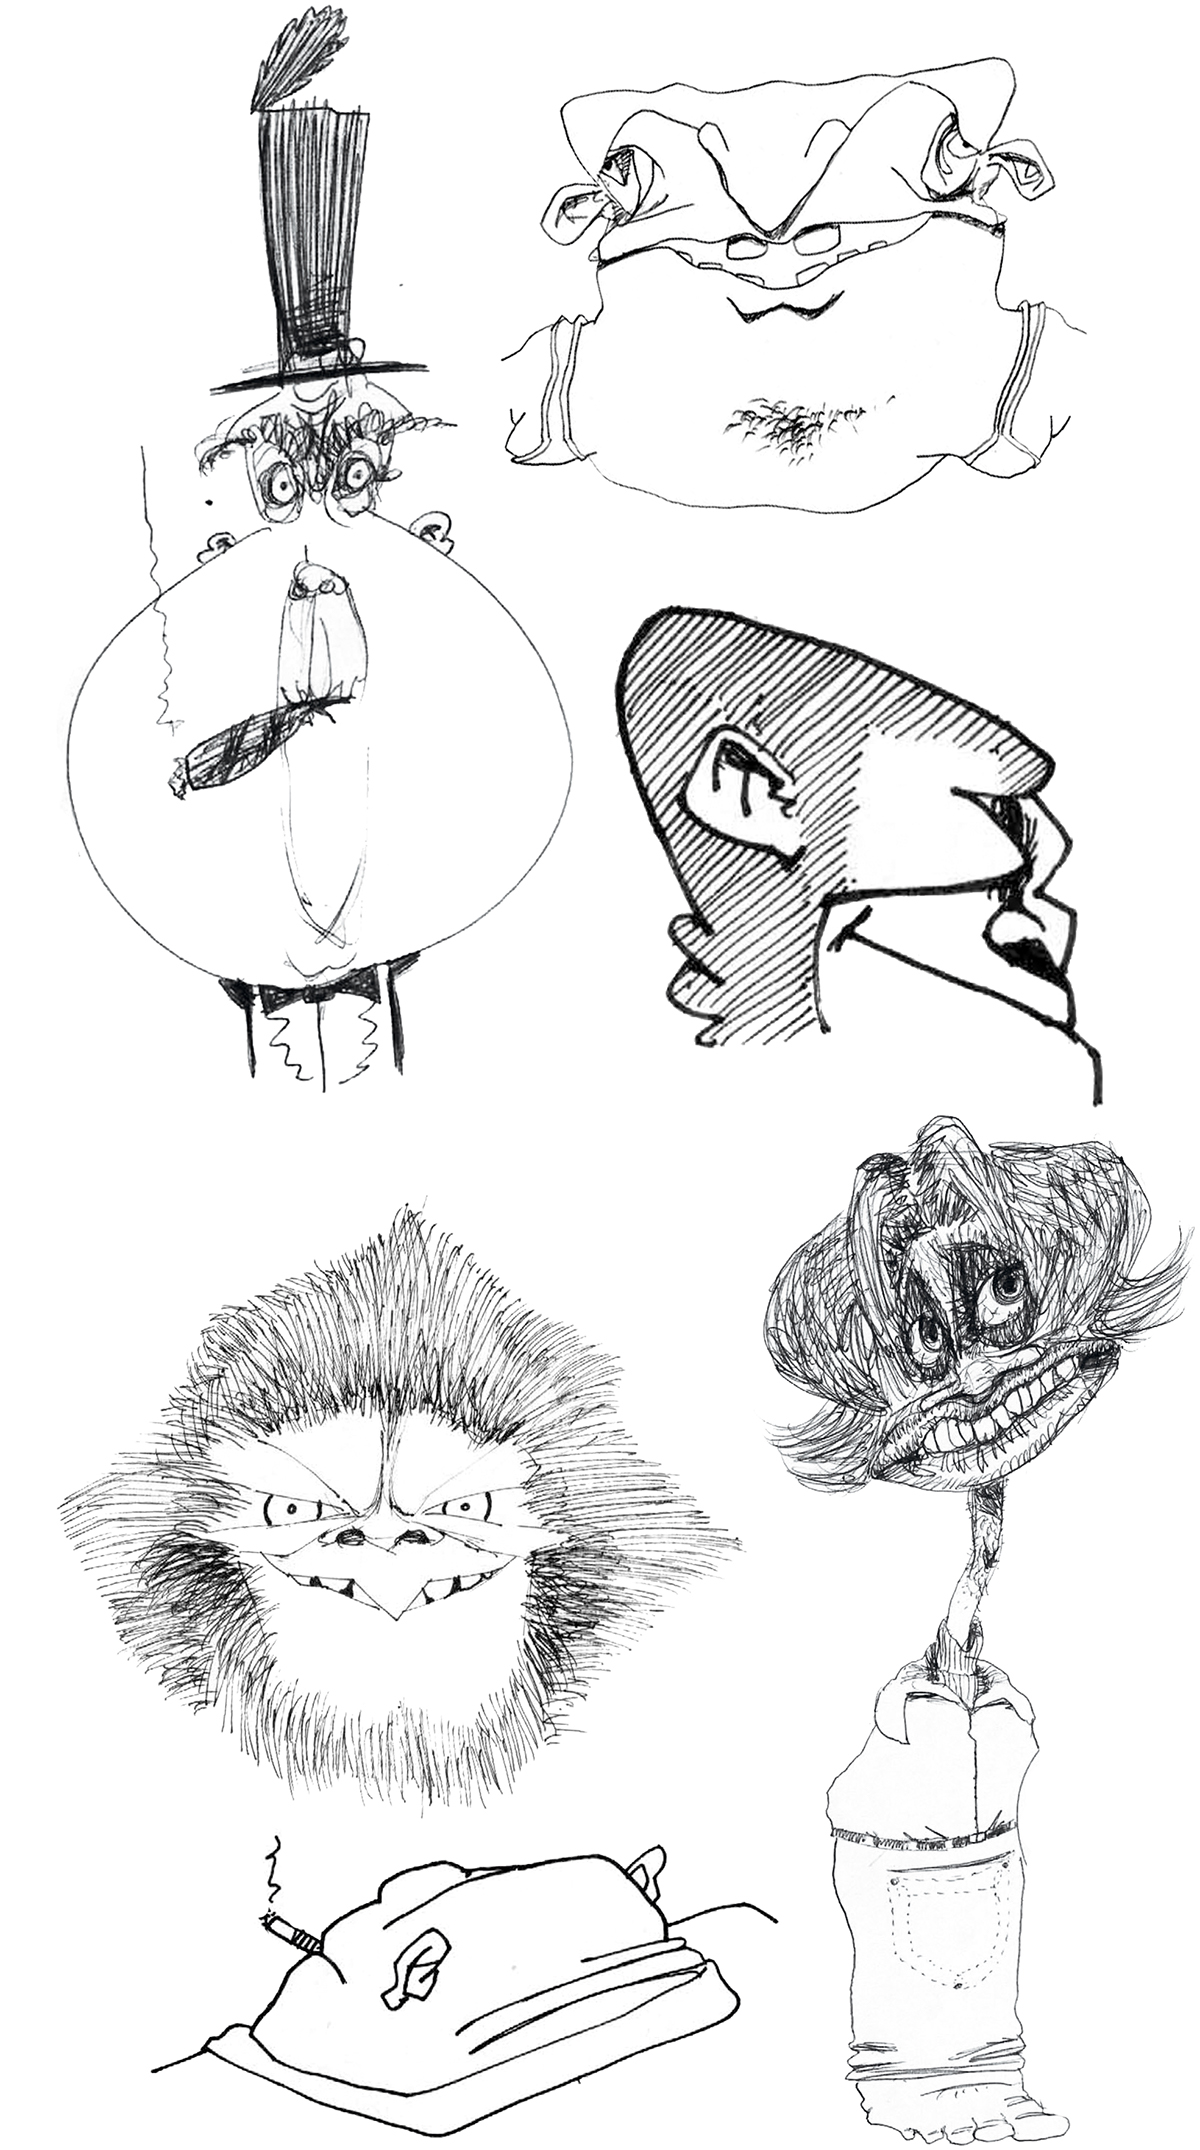 Character design  ILLUSTRATION  animation  Cartooning  art human men sketches caricature  